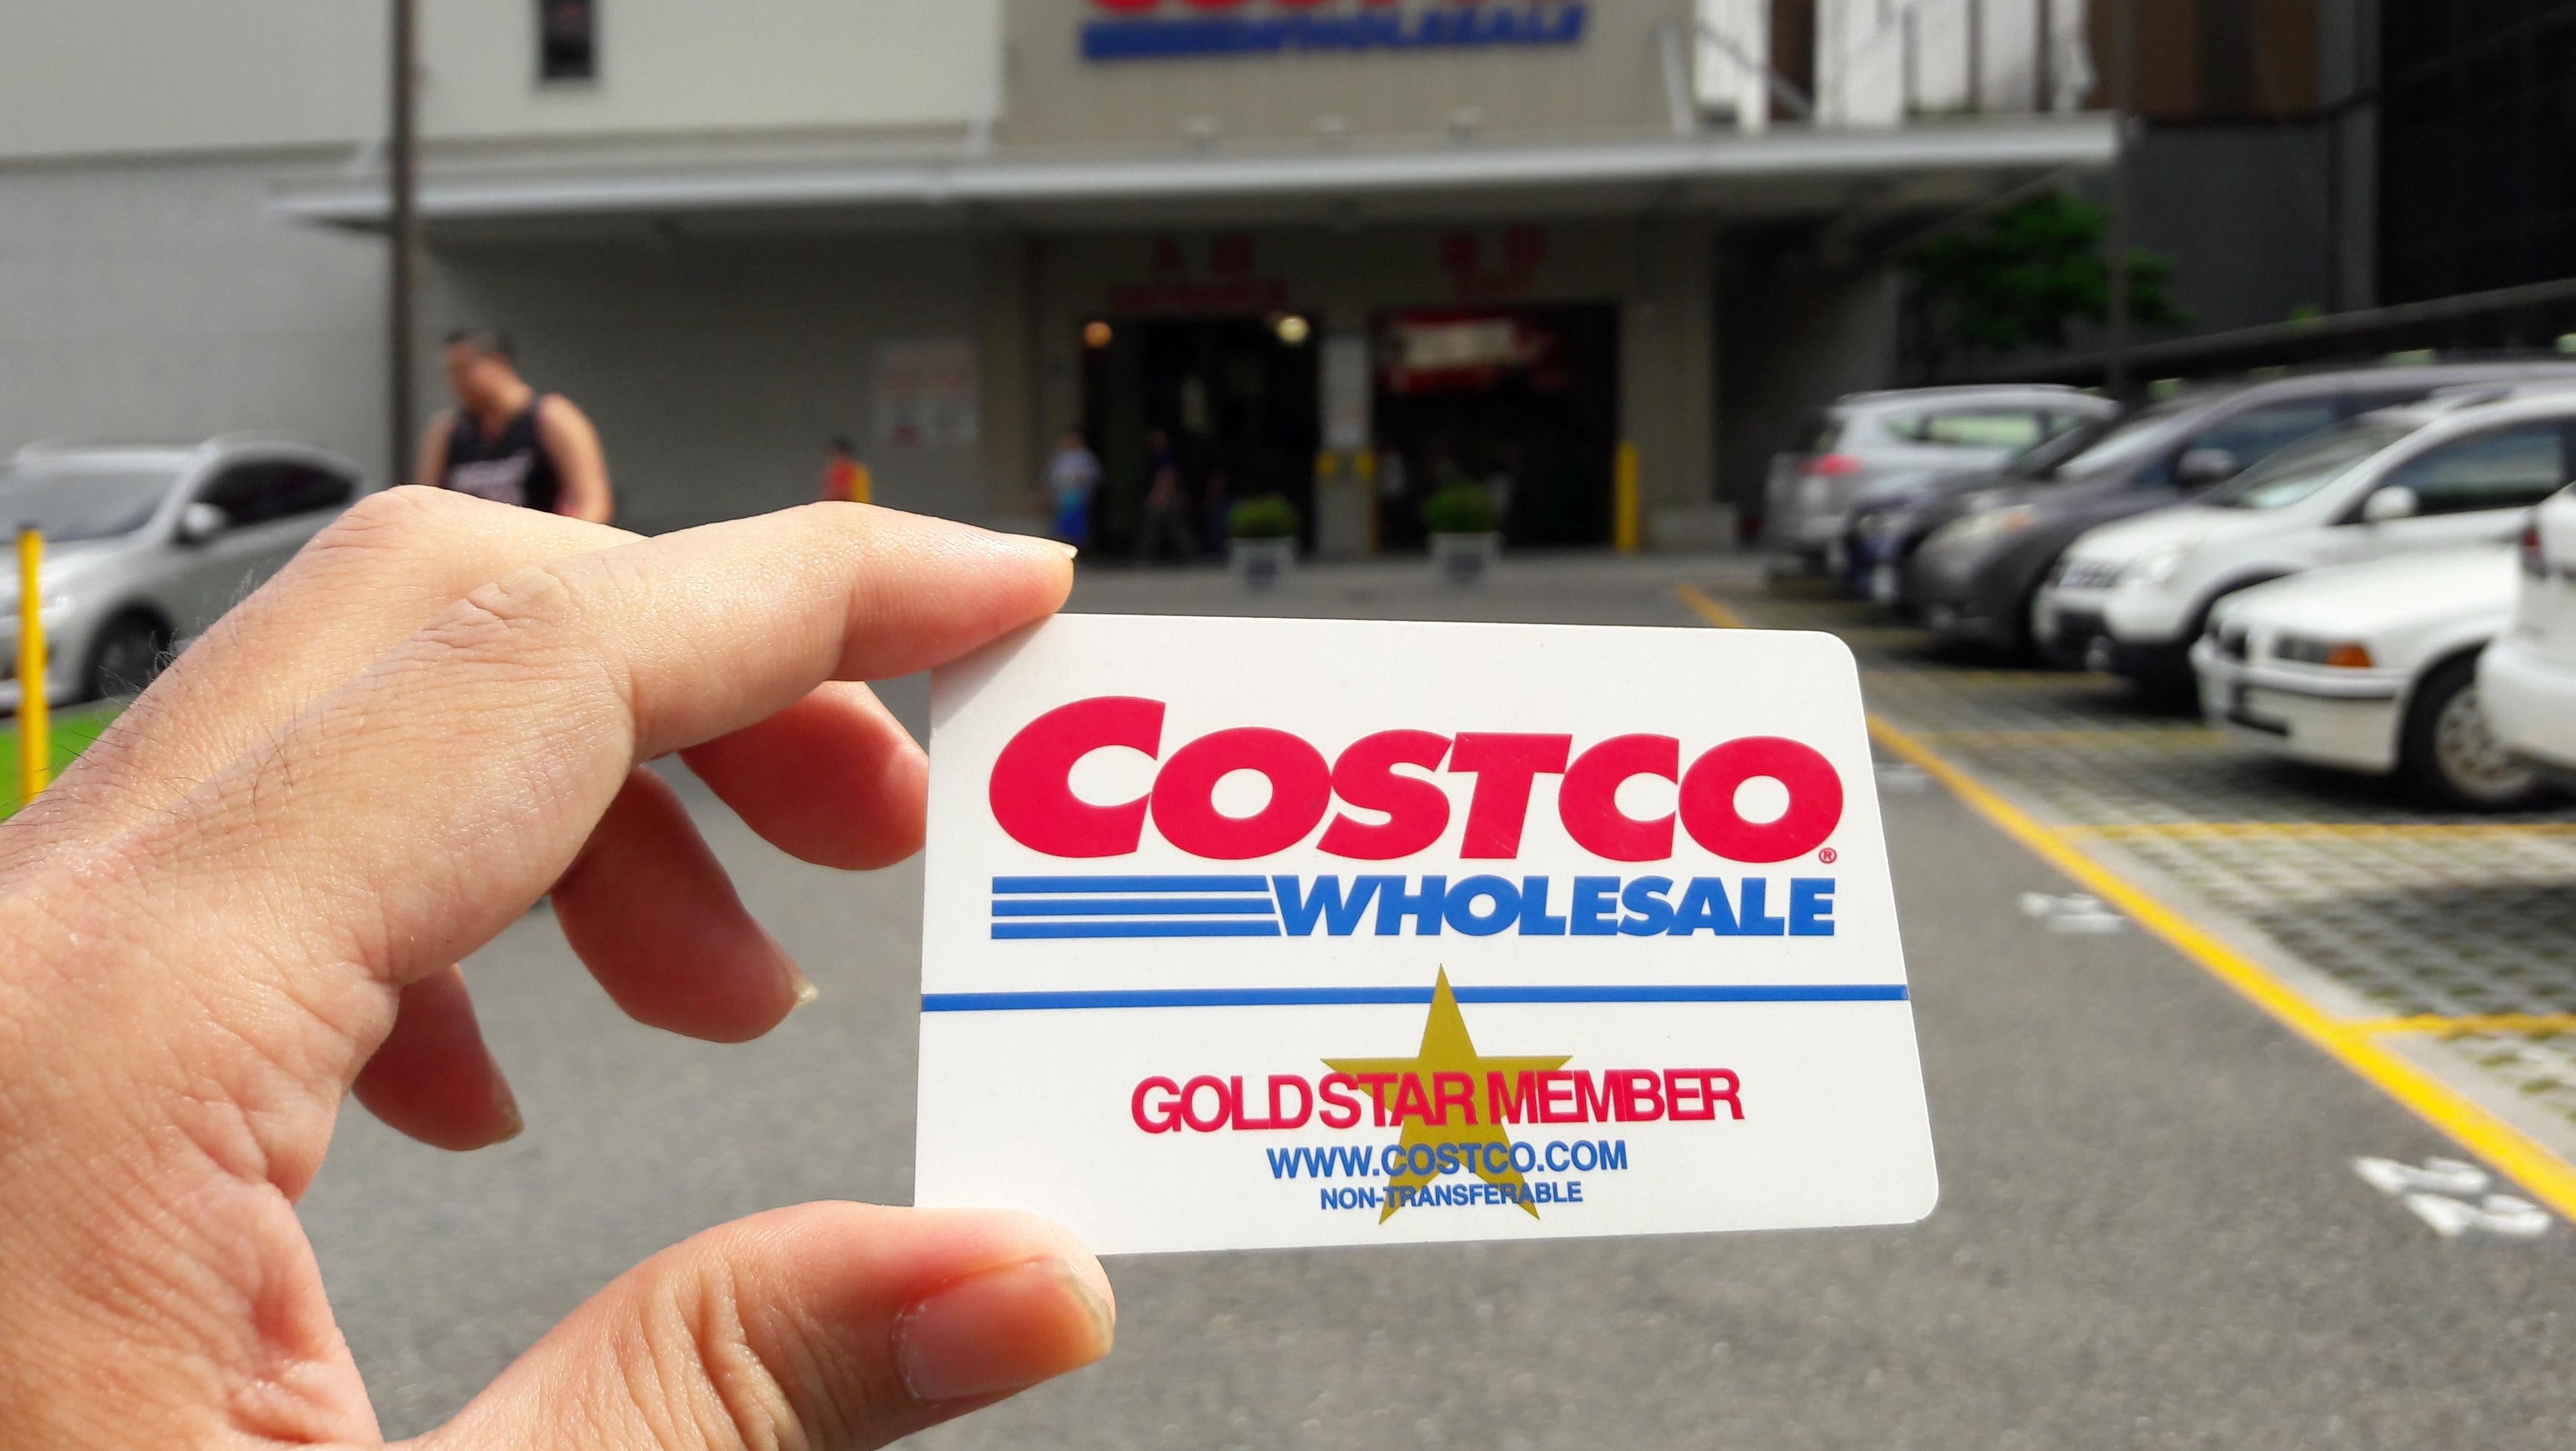 The subreddit r/povertyfinance gave away 500 Costco memberships to its members, many of whom struggle financially. (Photo: Andy.LIU, Shutterstock)